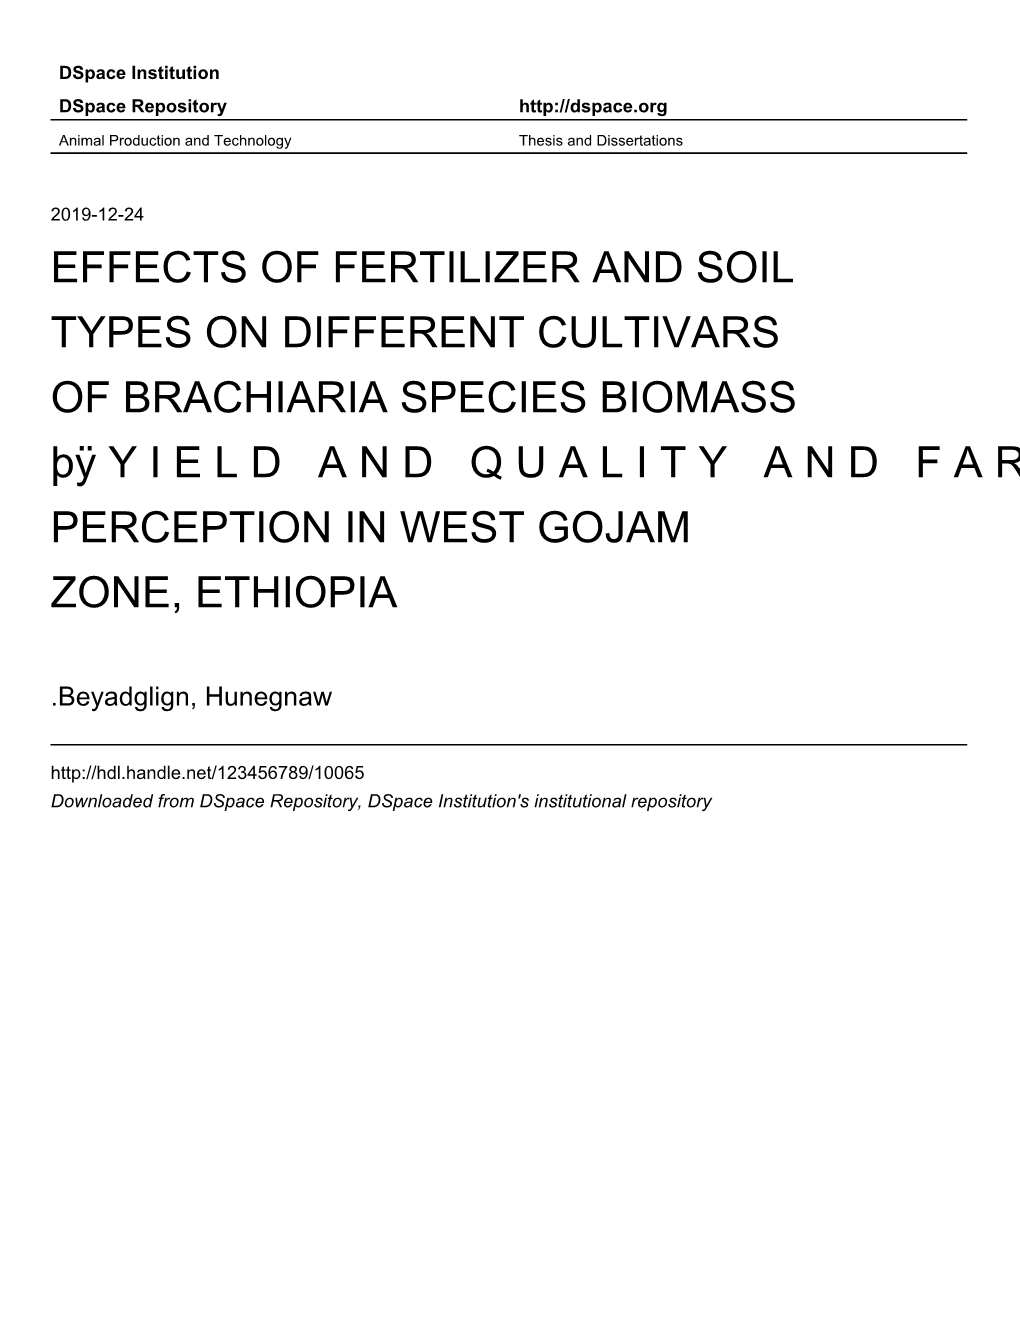 Effects of Fertilizer and Soil Types on Different Cultivars of Brachiaria Species Biomass Þÿyieldandqualityandfarmers Percepti